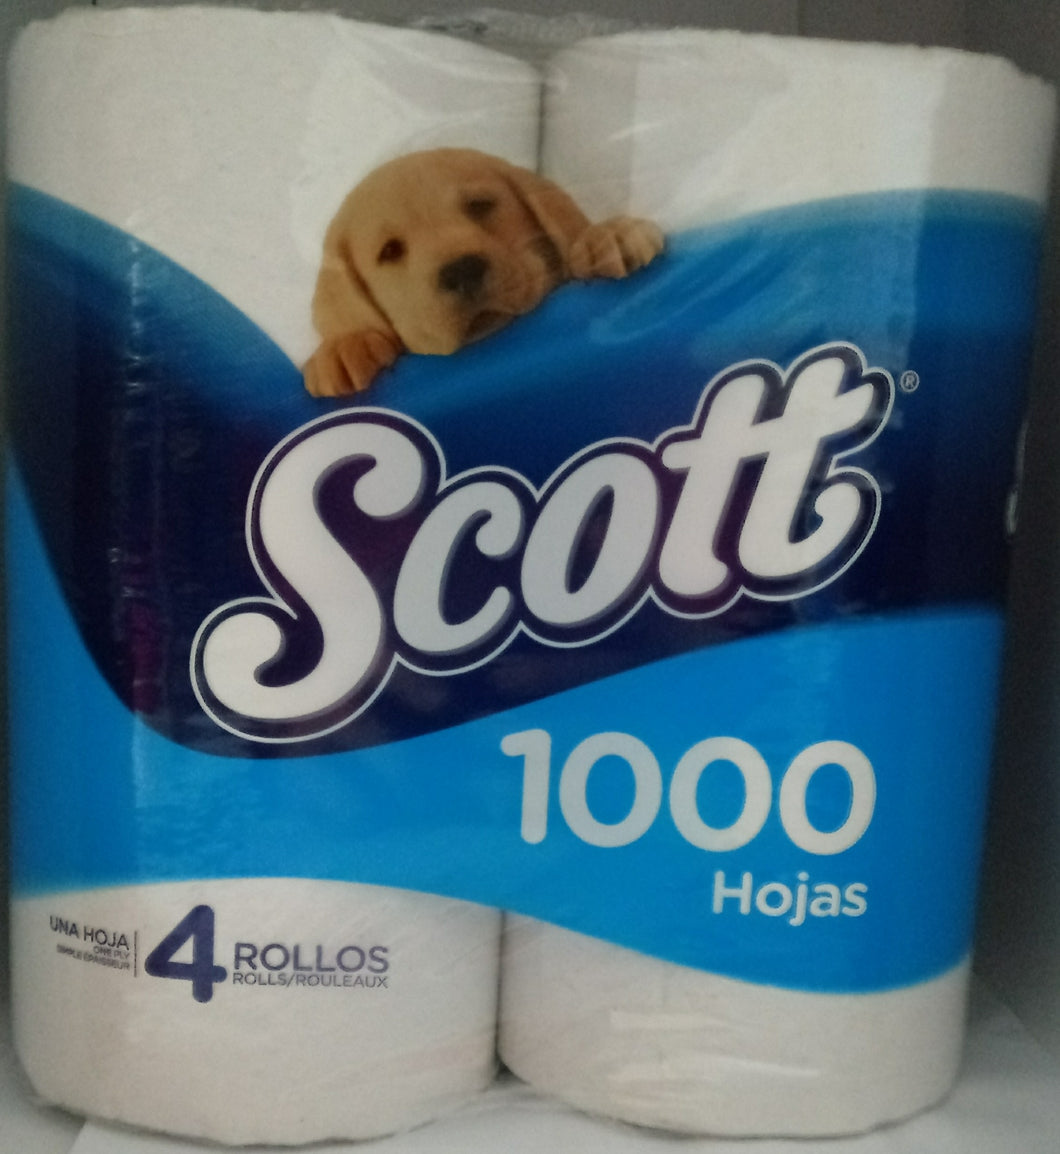 Papel Higienico Scott 1000 Hojas 4 rollos